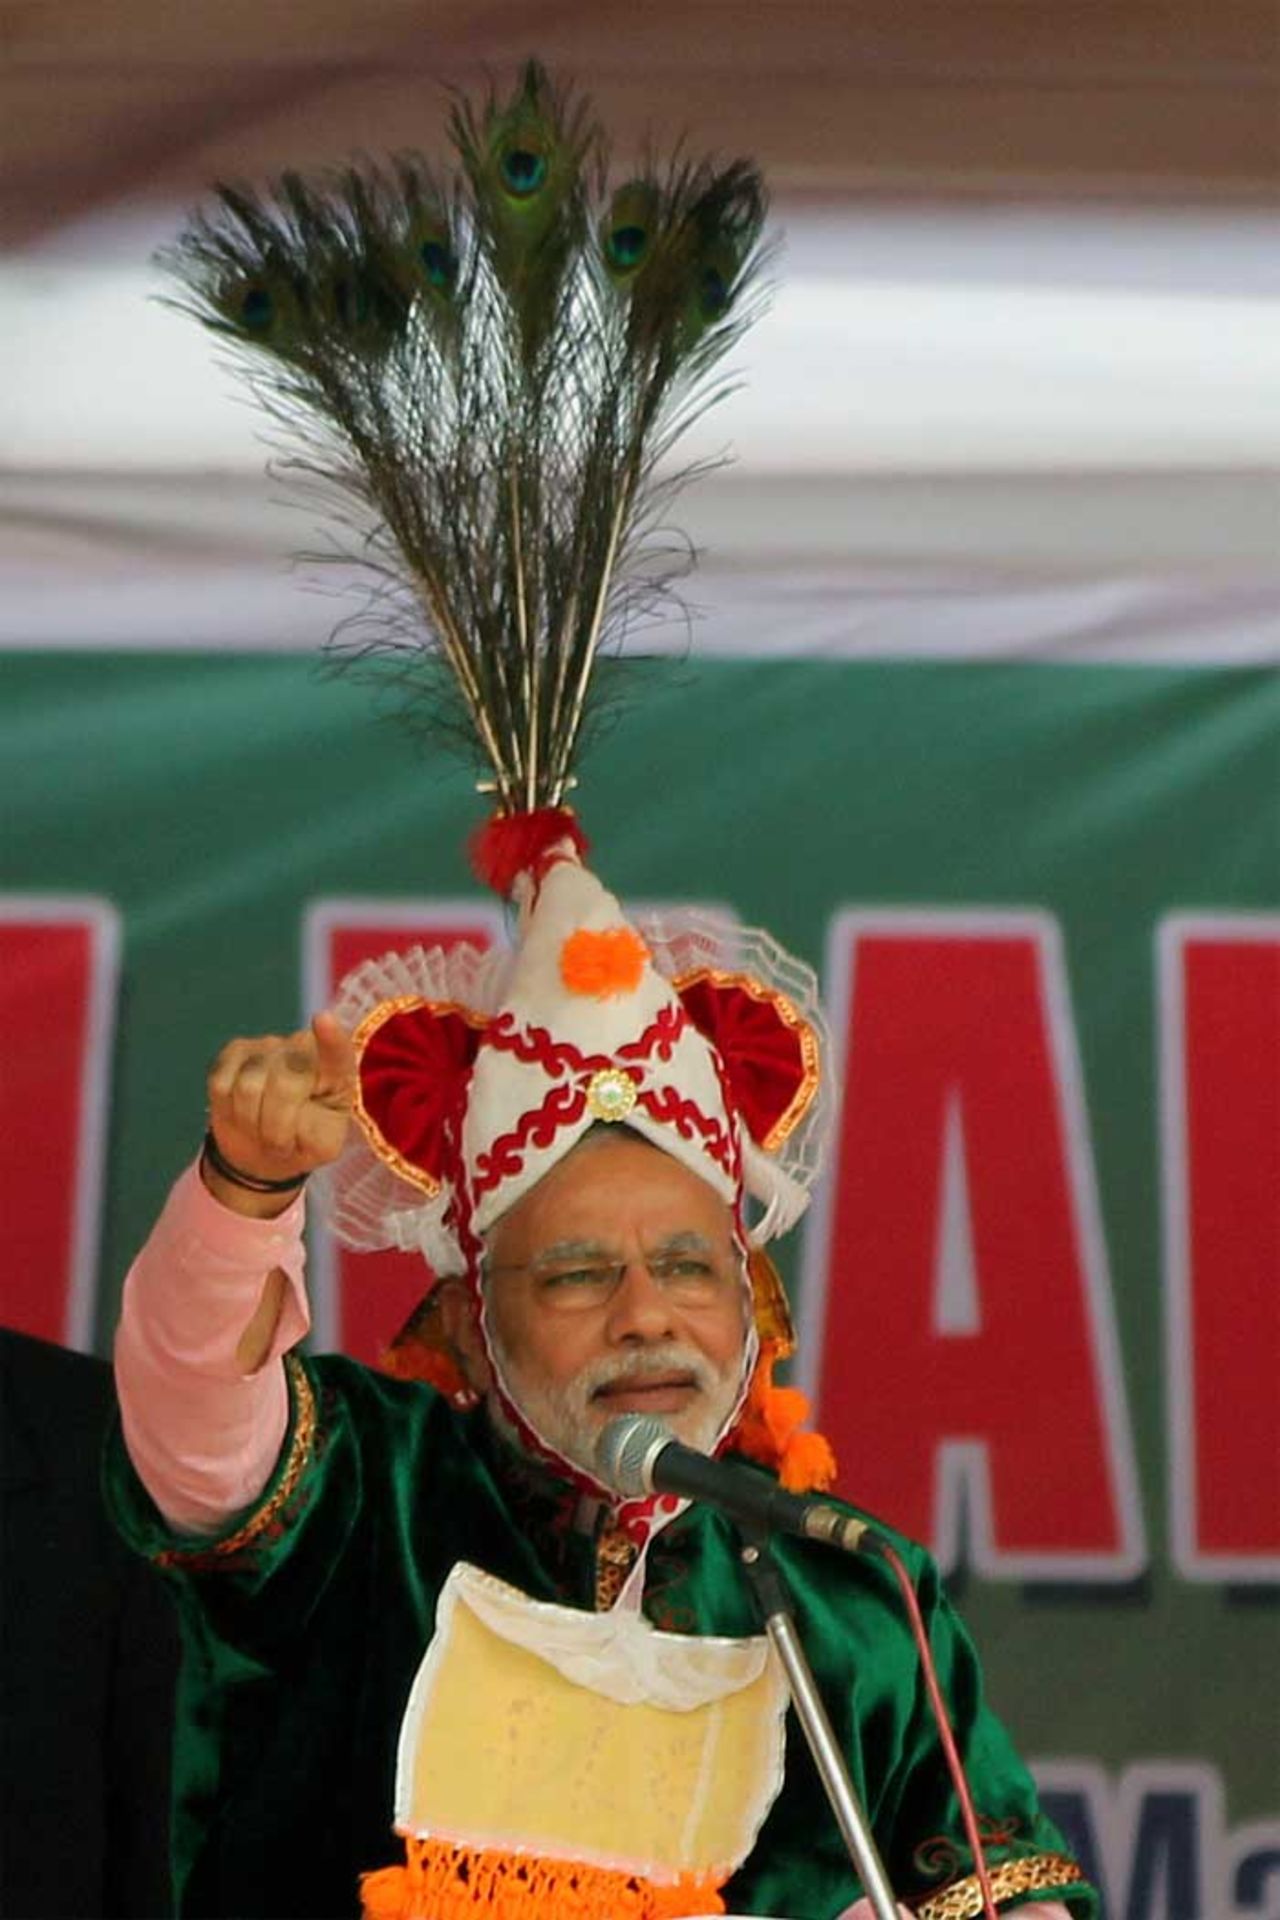 The many hats of Modi | CNN